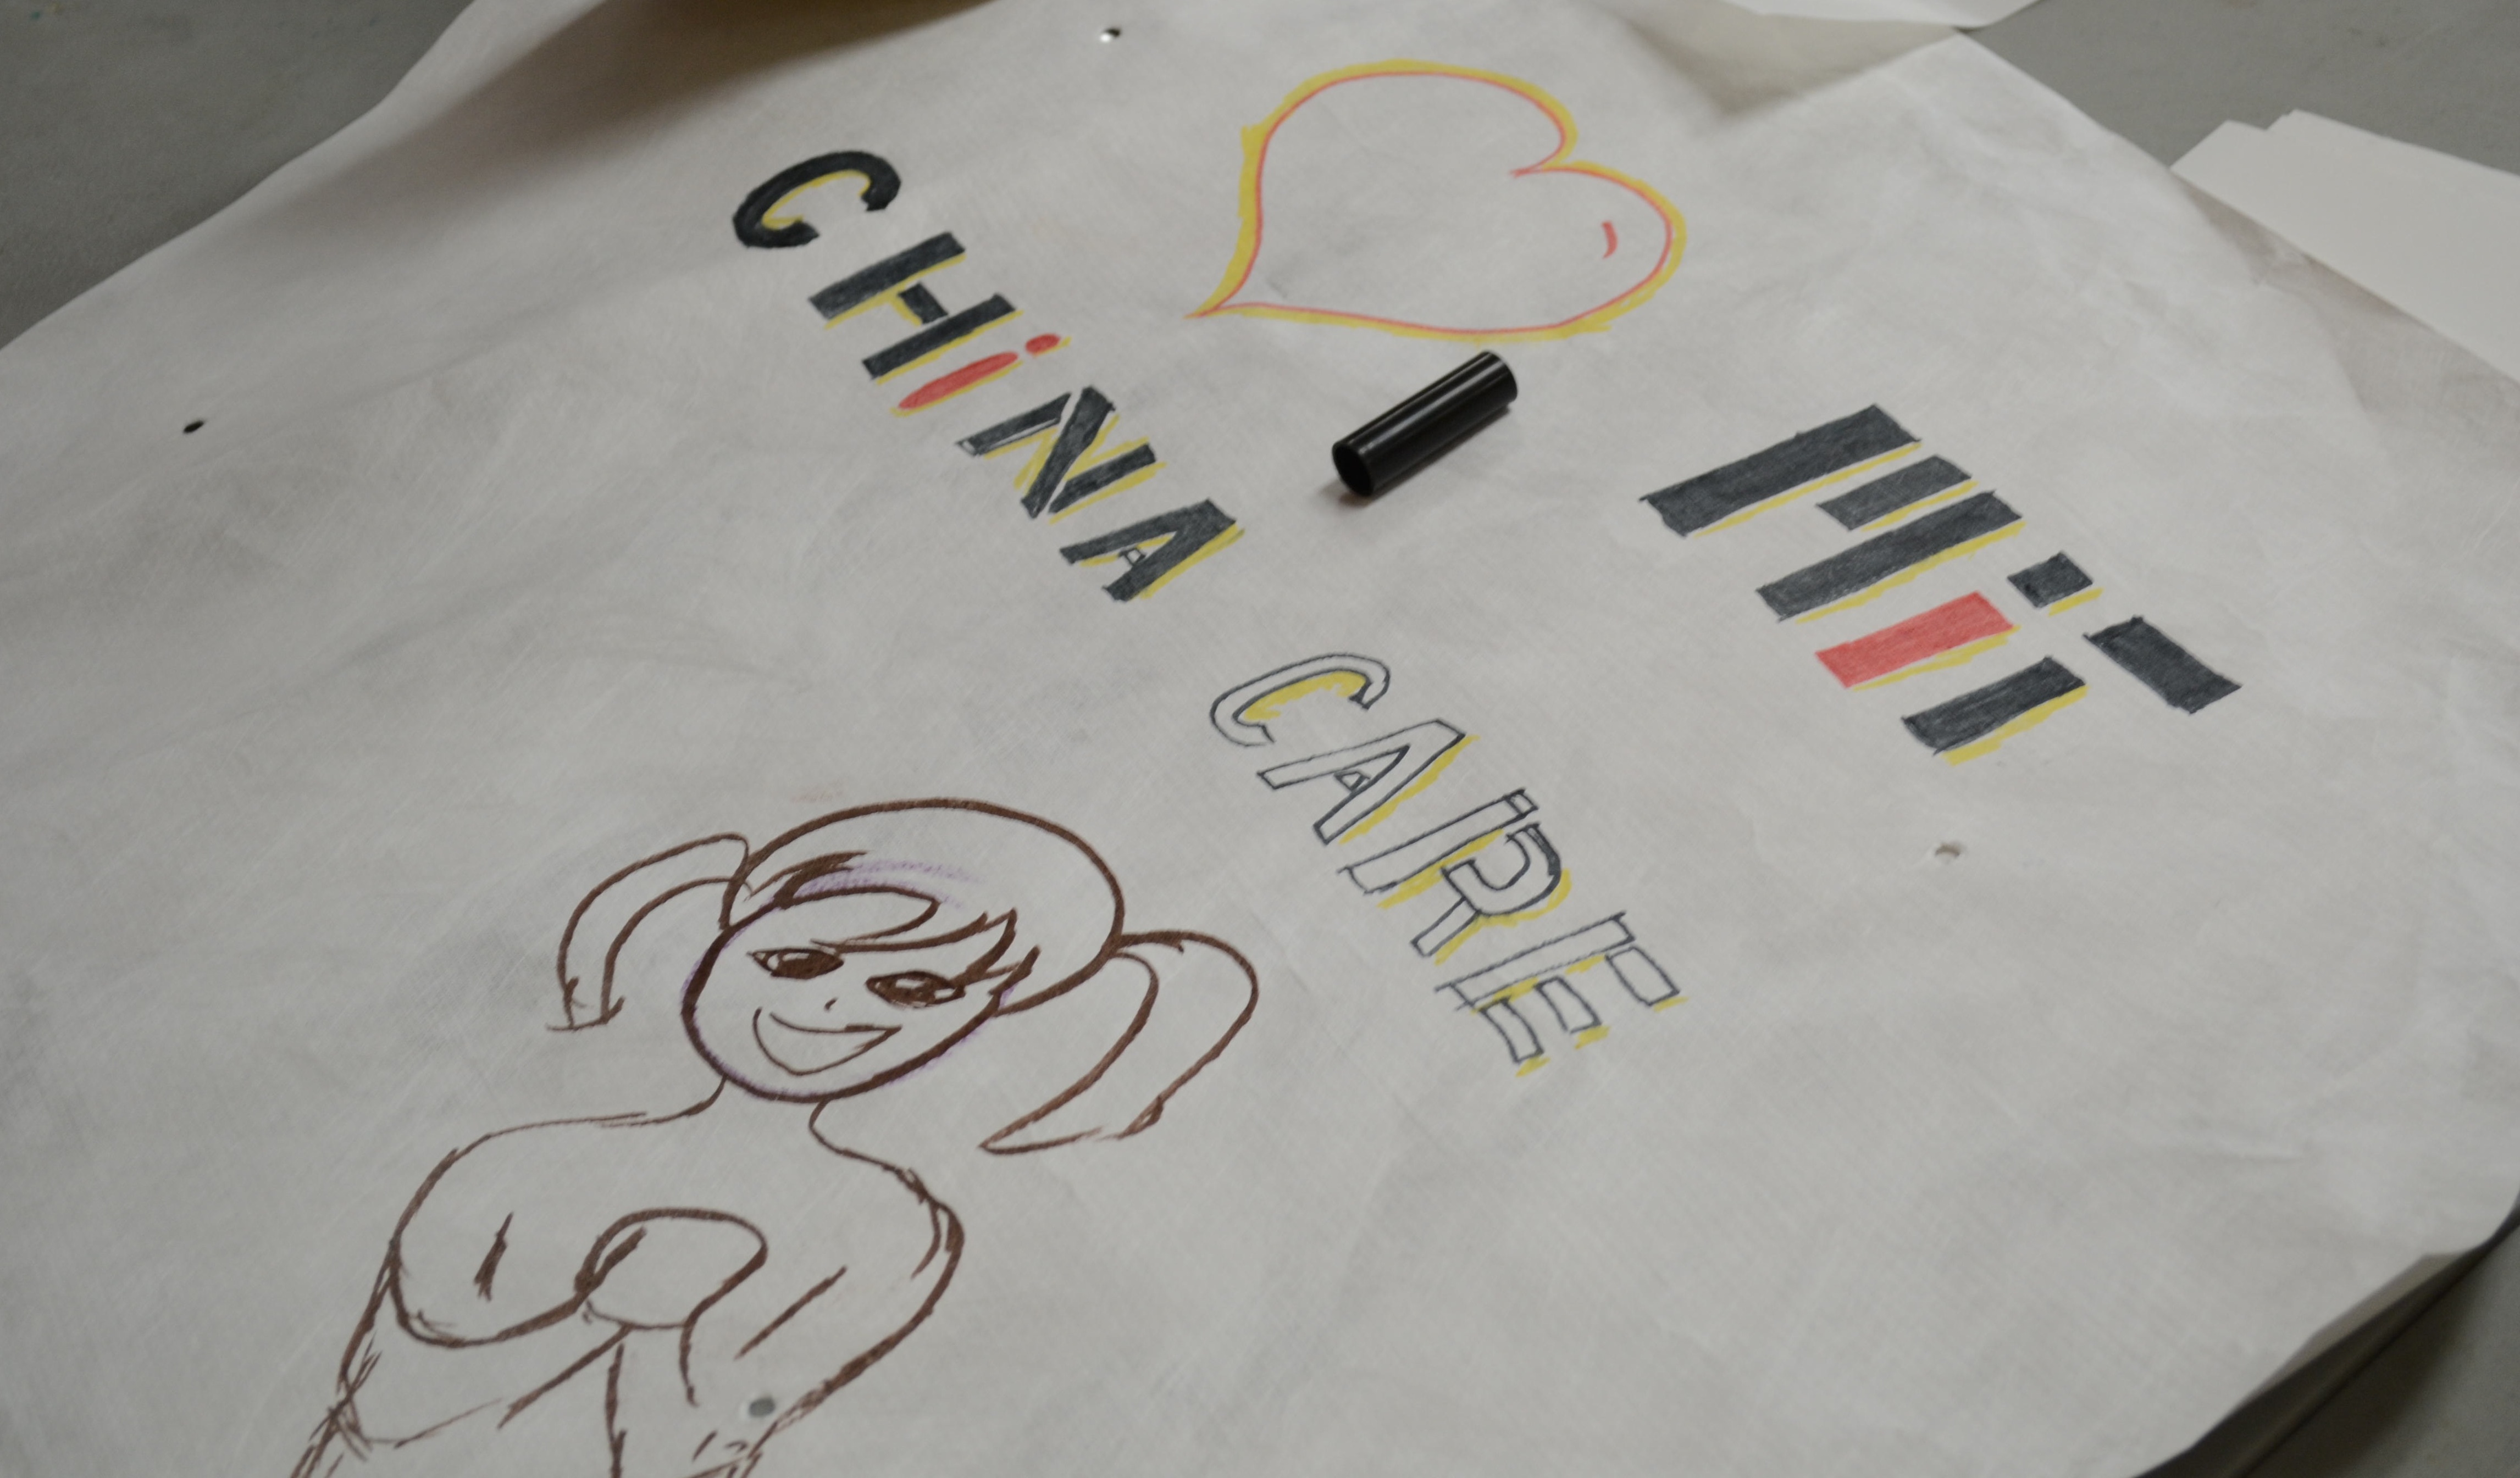 MIT China Care Club